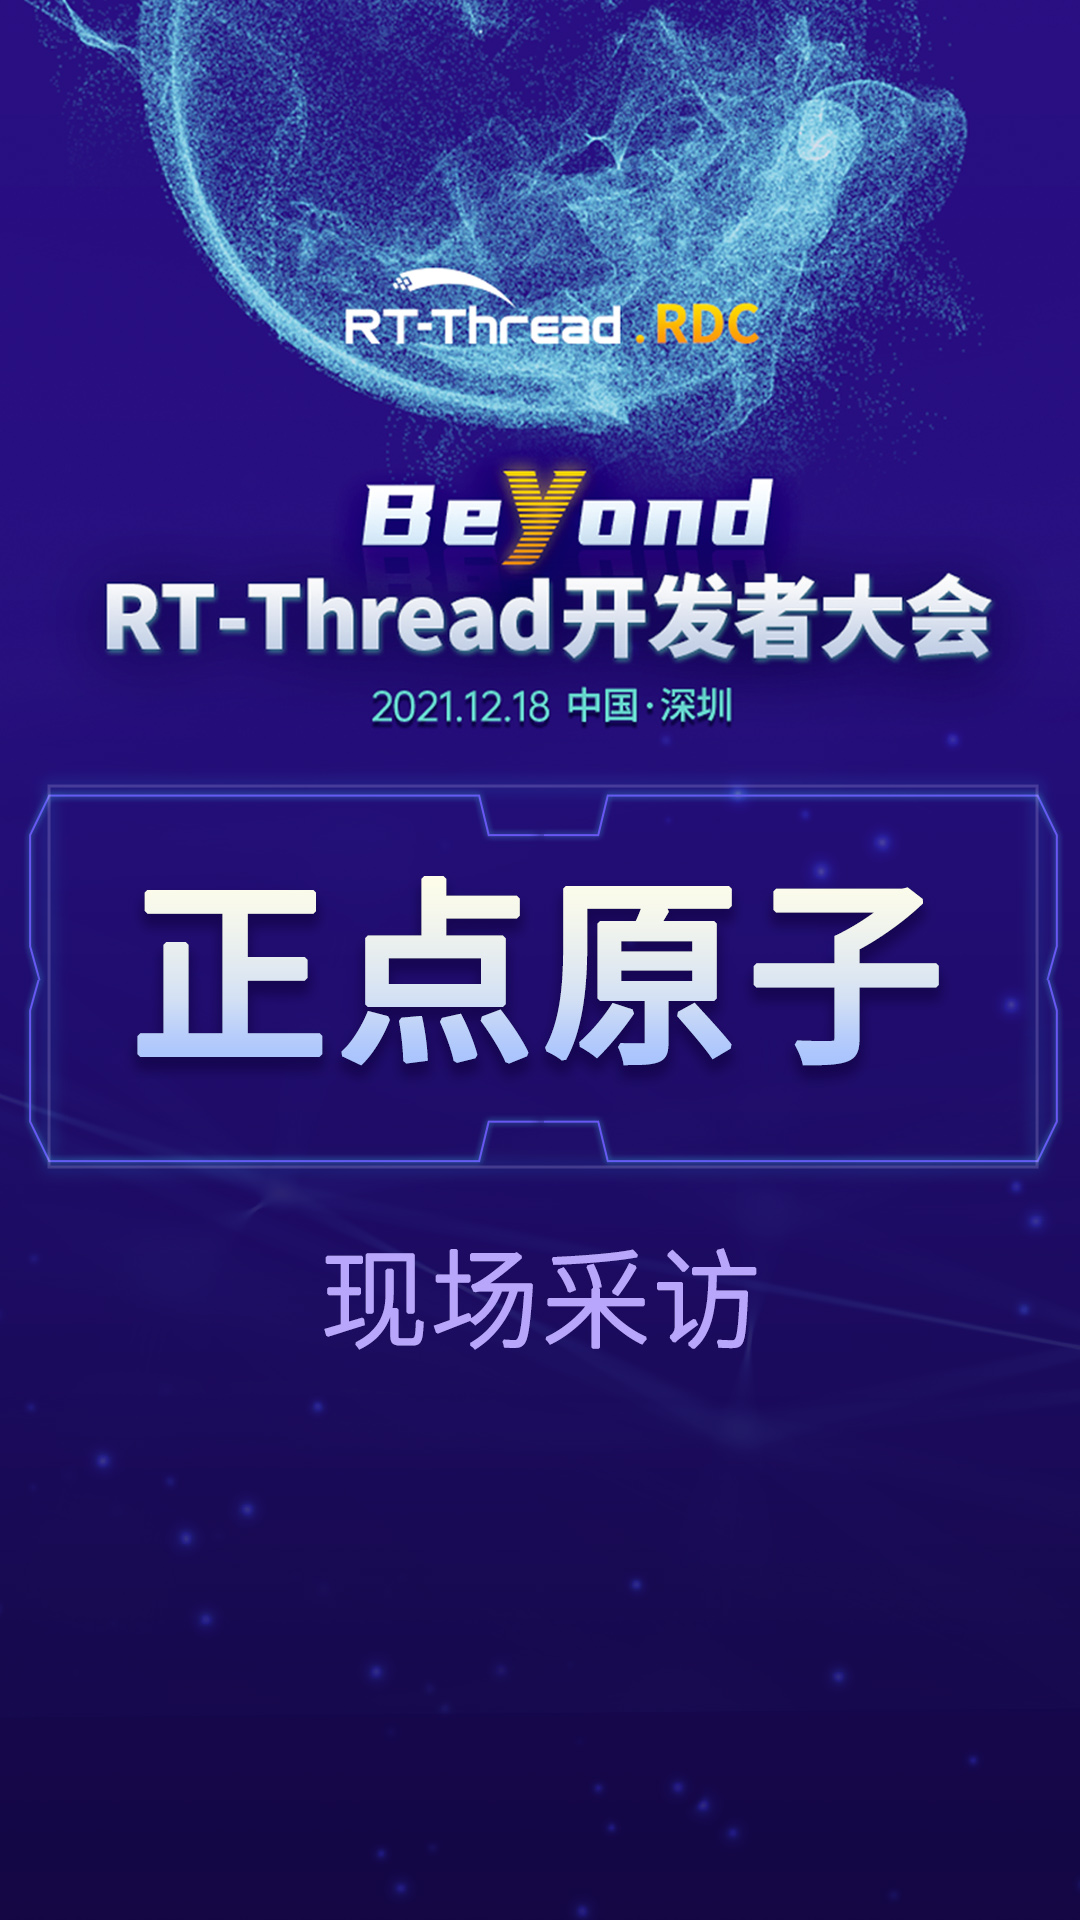 RT-Thread开发者大会-正点原子企业现场采访#嵌入式开发 